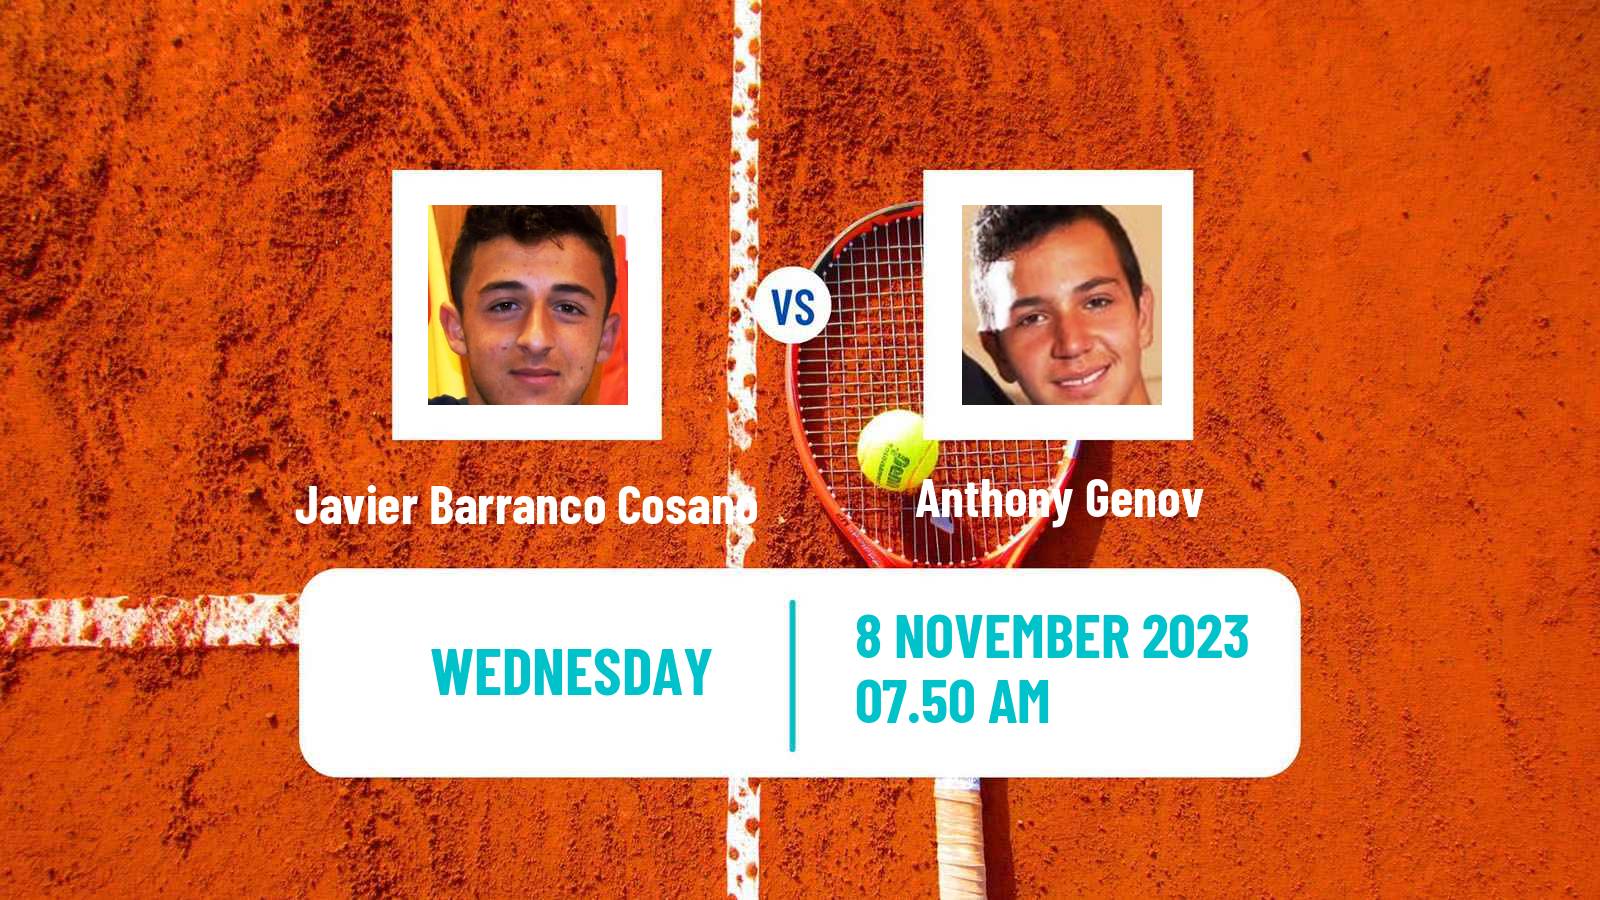 Tennis ITF M25 Benicarlo Men Javier Barranco Cosano - Anthony Genov